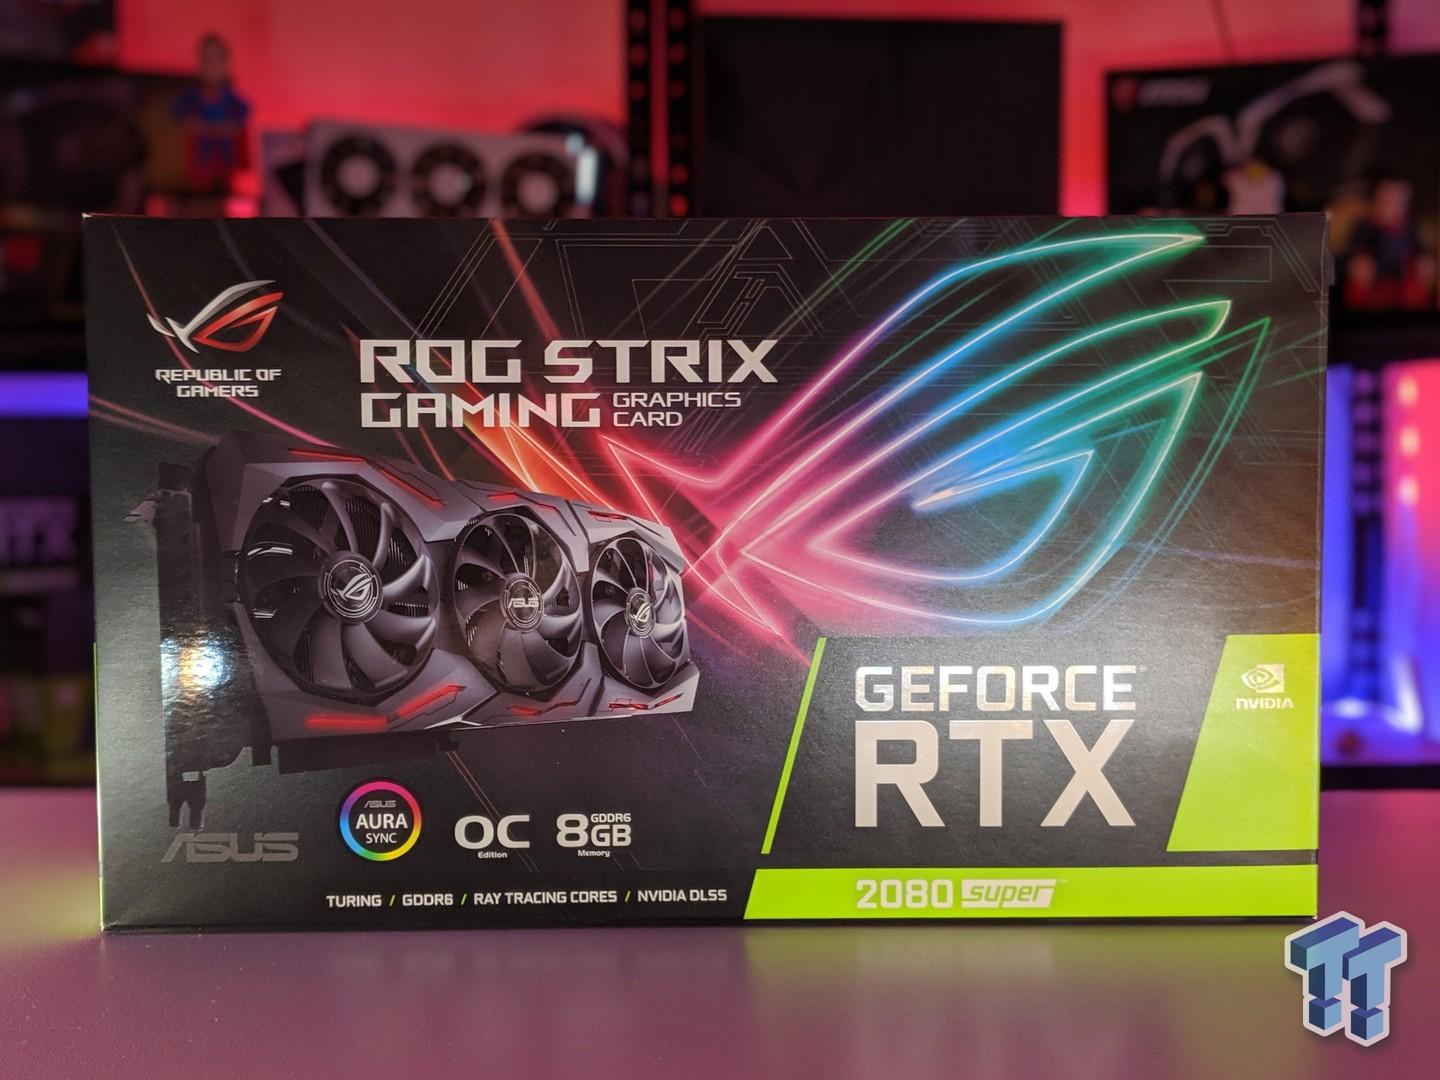 ASUS GeForce RTX 2080 SUPER ROG STRIX OC Review